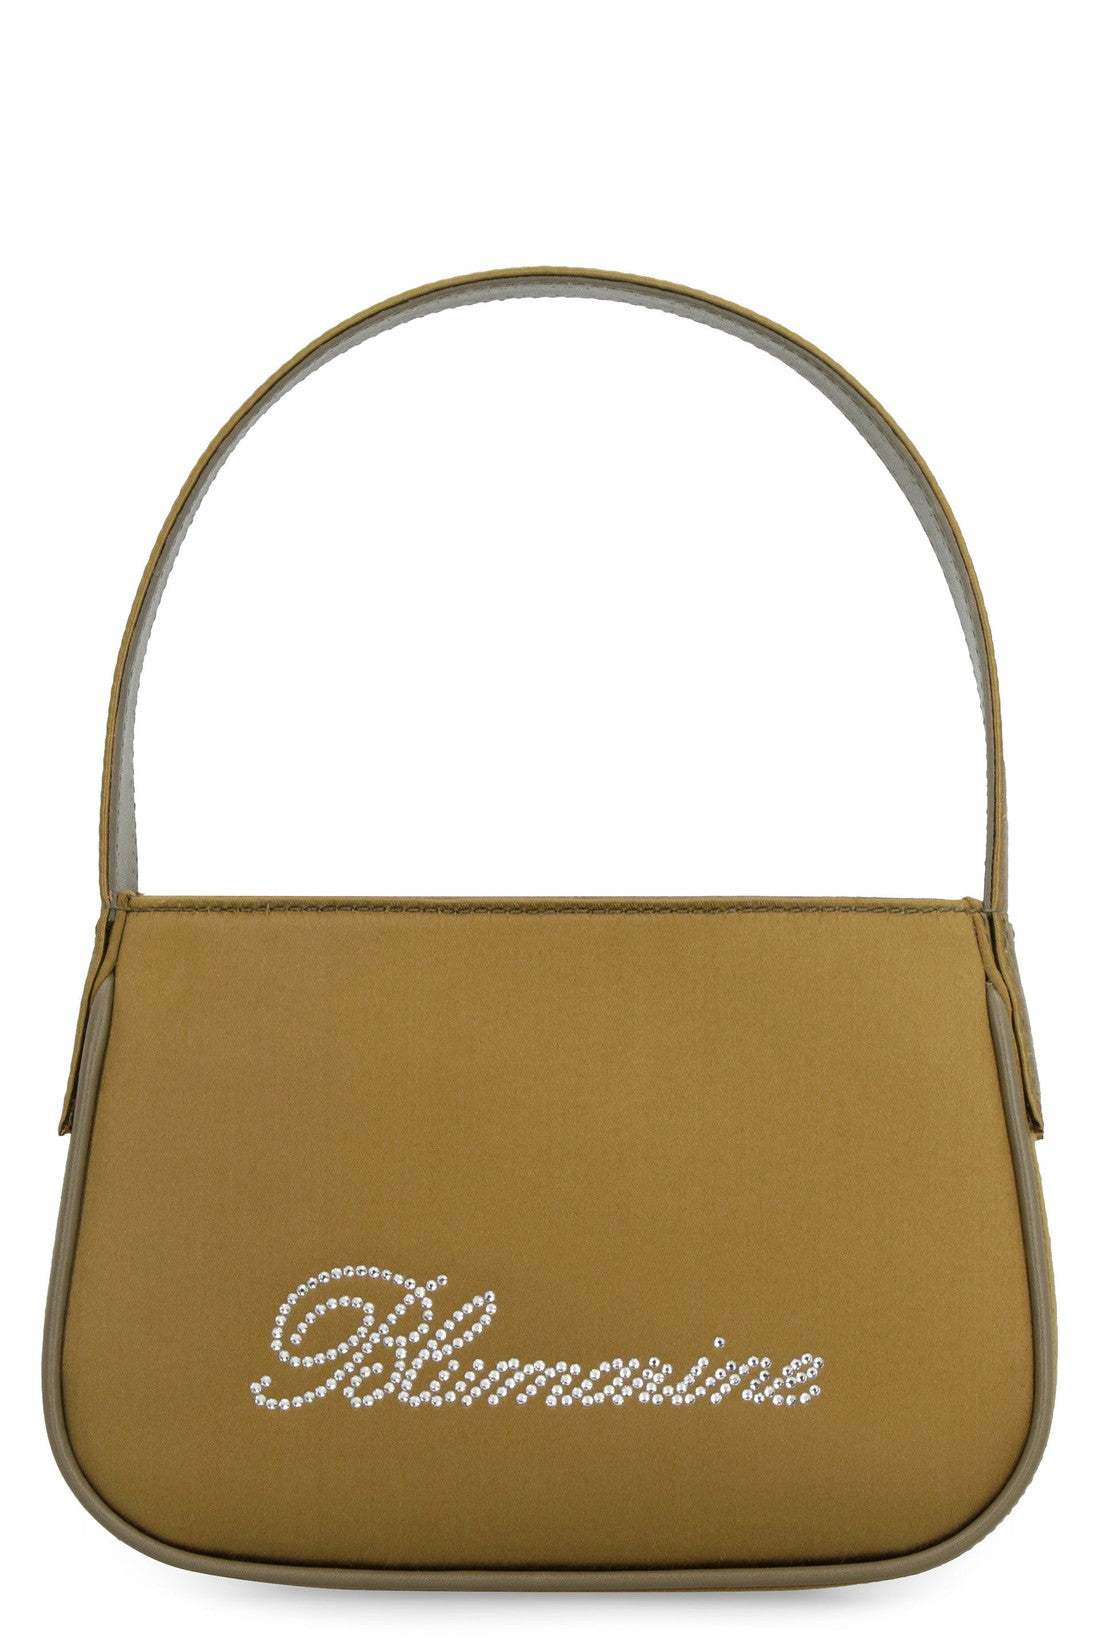 Blumarine-OUTLET-SALE-Satin handbag-ARCHIVIST